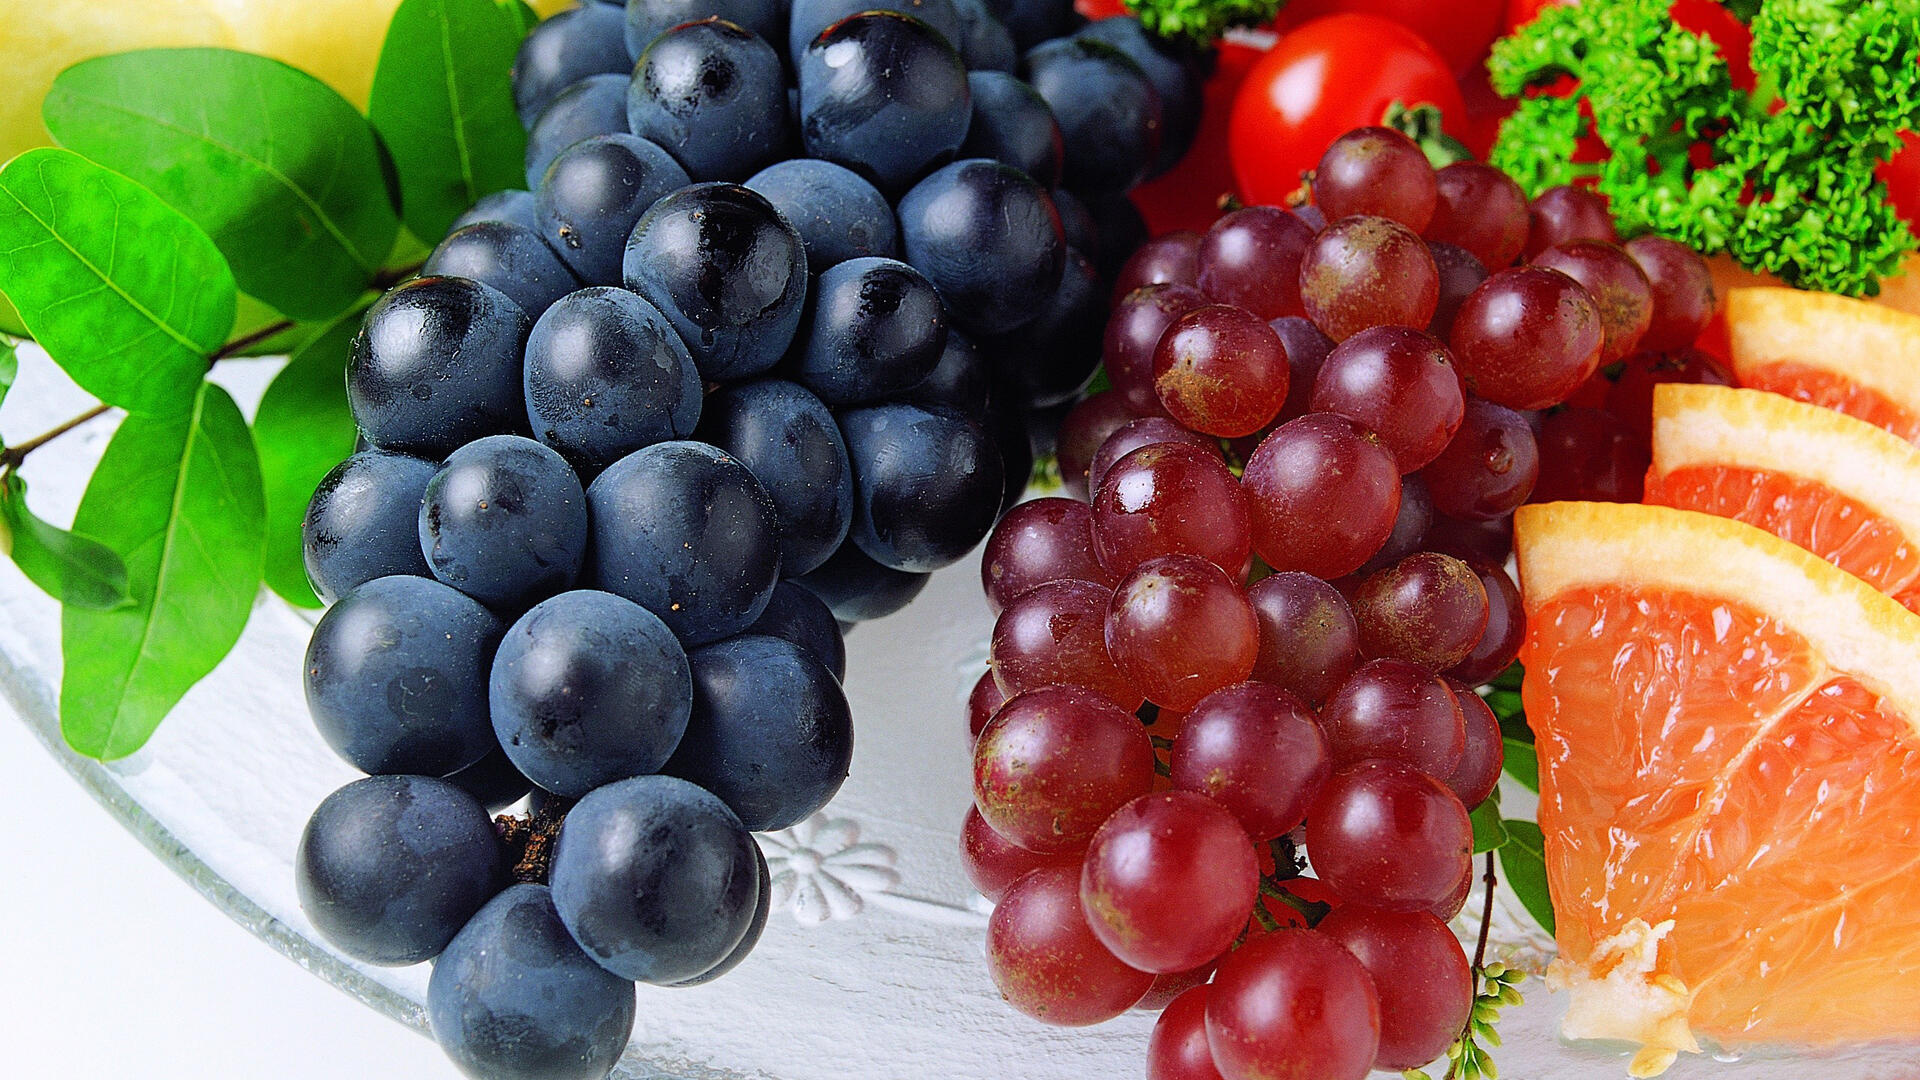 Grapes: A white or purple flesh of sweet taste, Eaten raw or in juice. 1920x1080 Full HD Background.